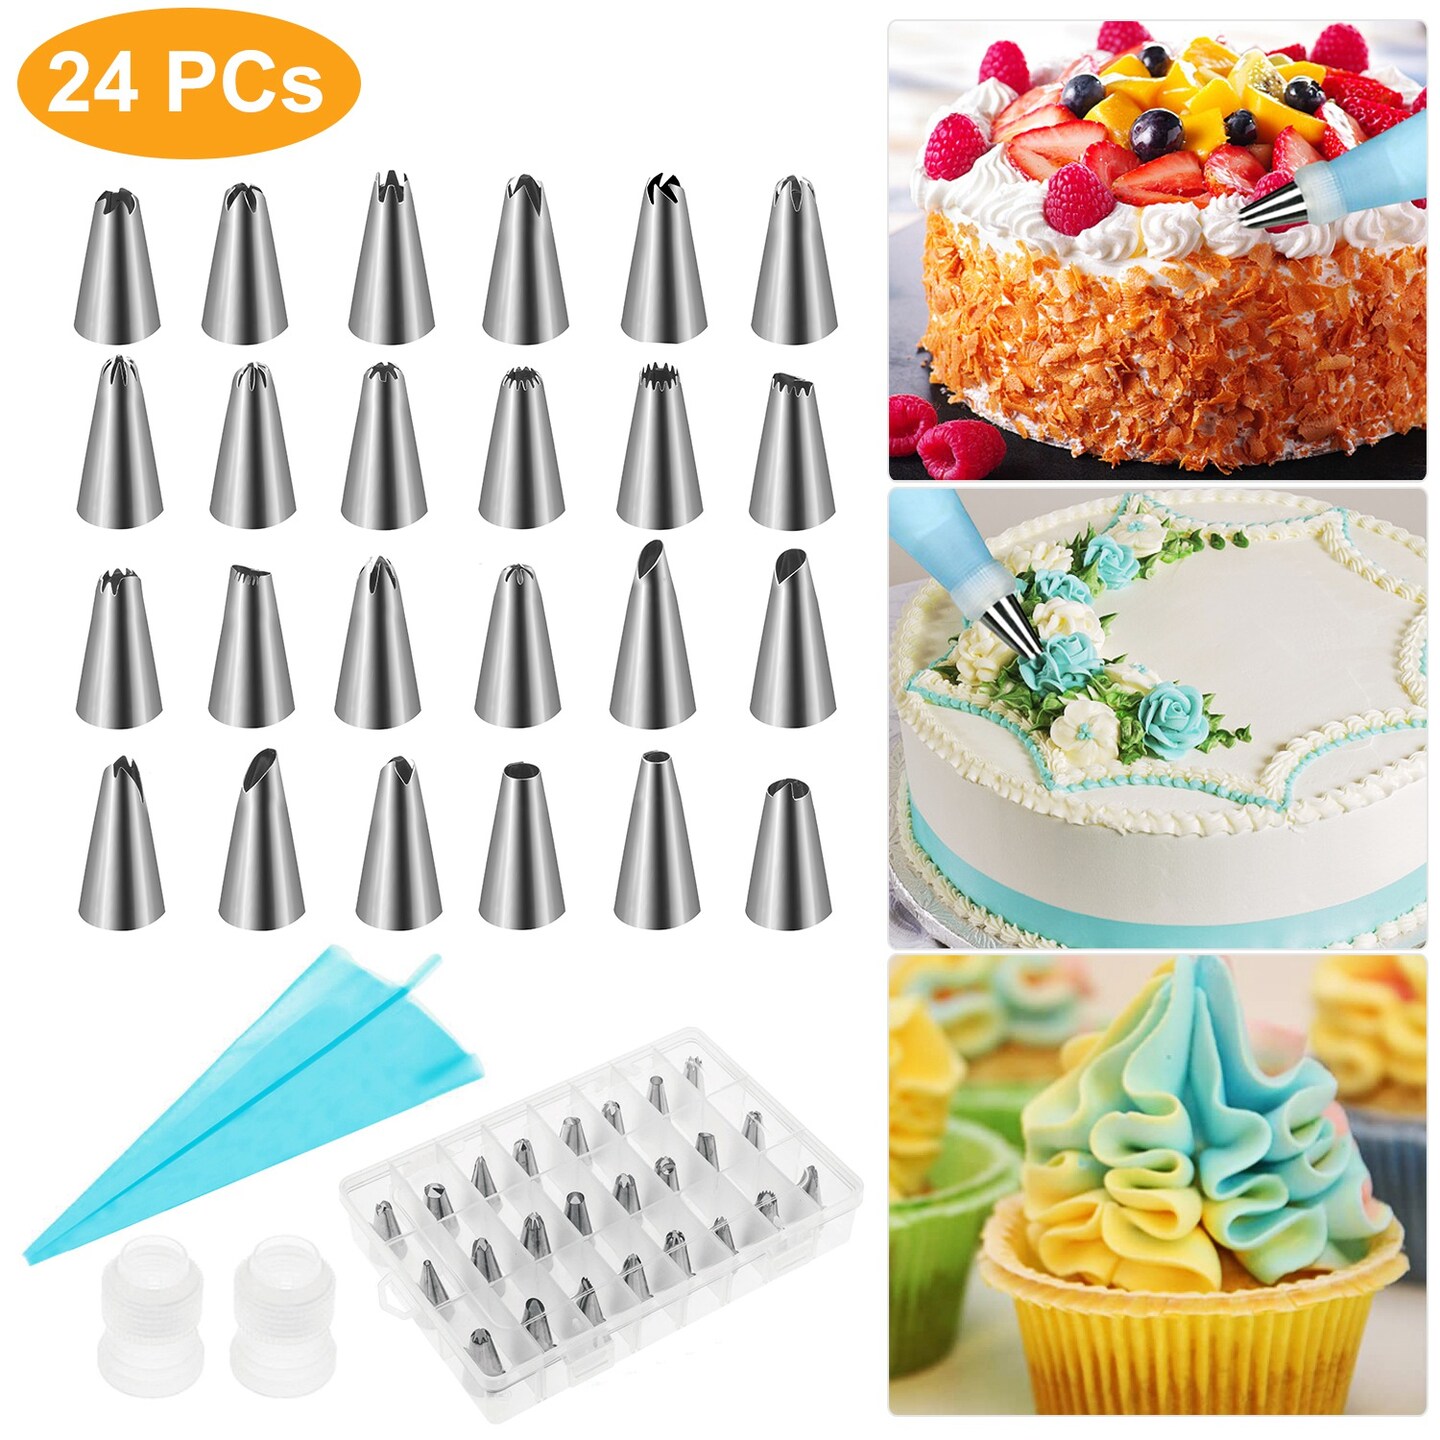 Eggracks by Global Phoenix 24Pcs Cake Decorating Supplies kit Stainless  Steel DIY Baking Supplies Icing Tips